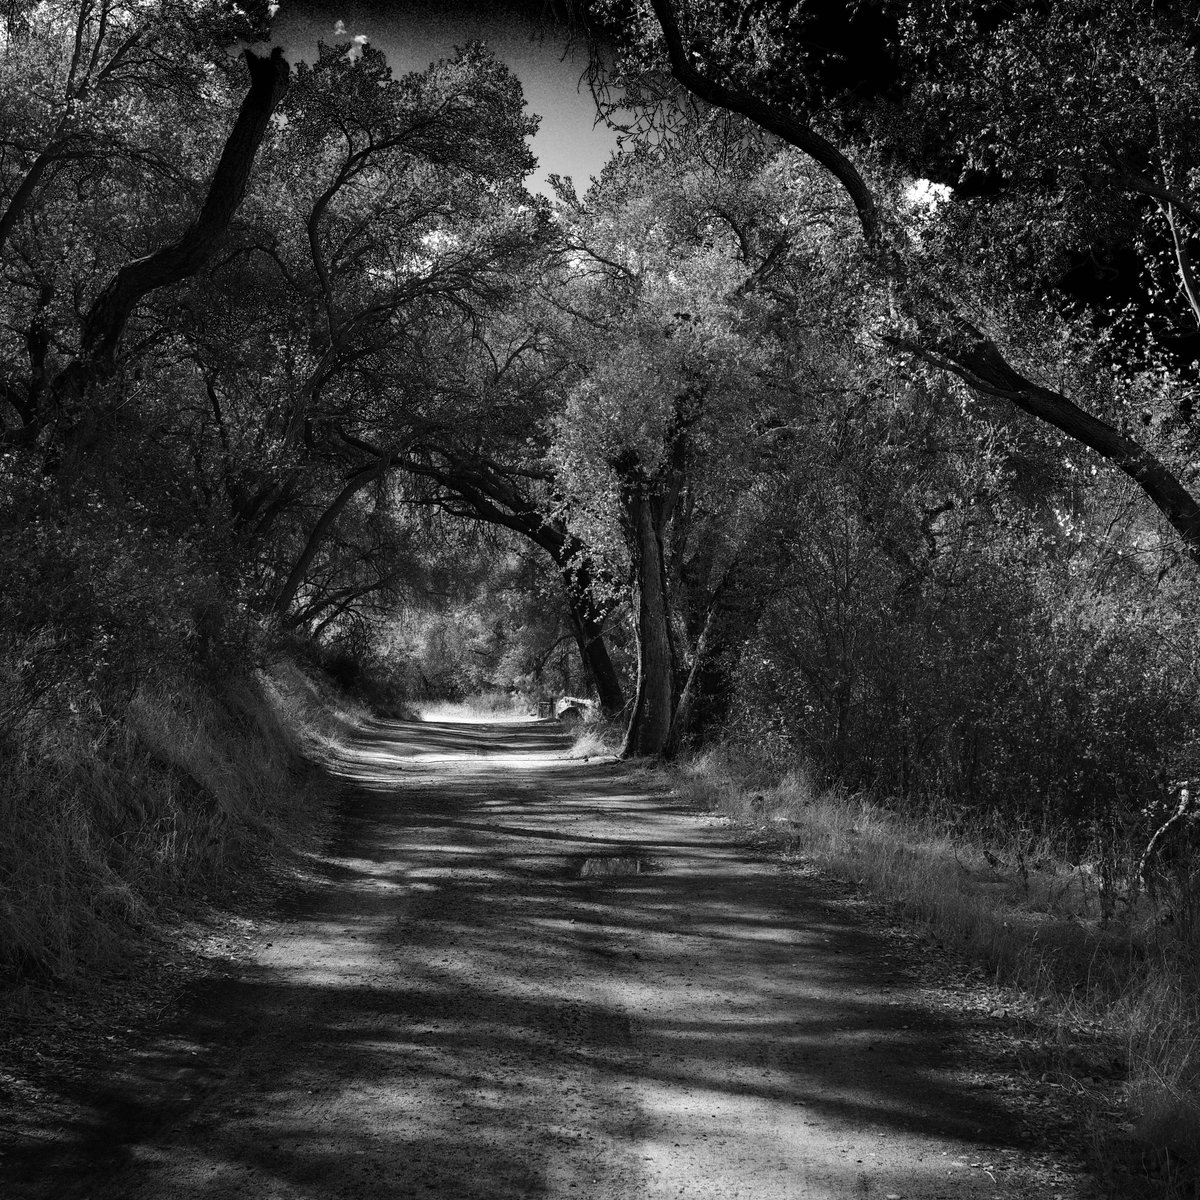 A walk beneath the oaks at Blue Sky Reserve near home. #grsnaps #poway #blueskyreserve #oaks #ricohgriiix #ricohgr #monochrome #blackandwhite ⁦@cityofpoway⁩